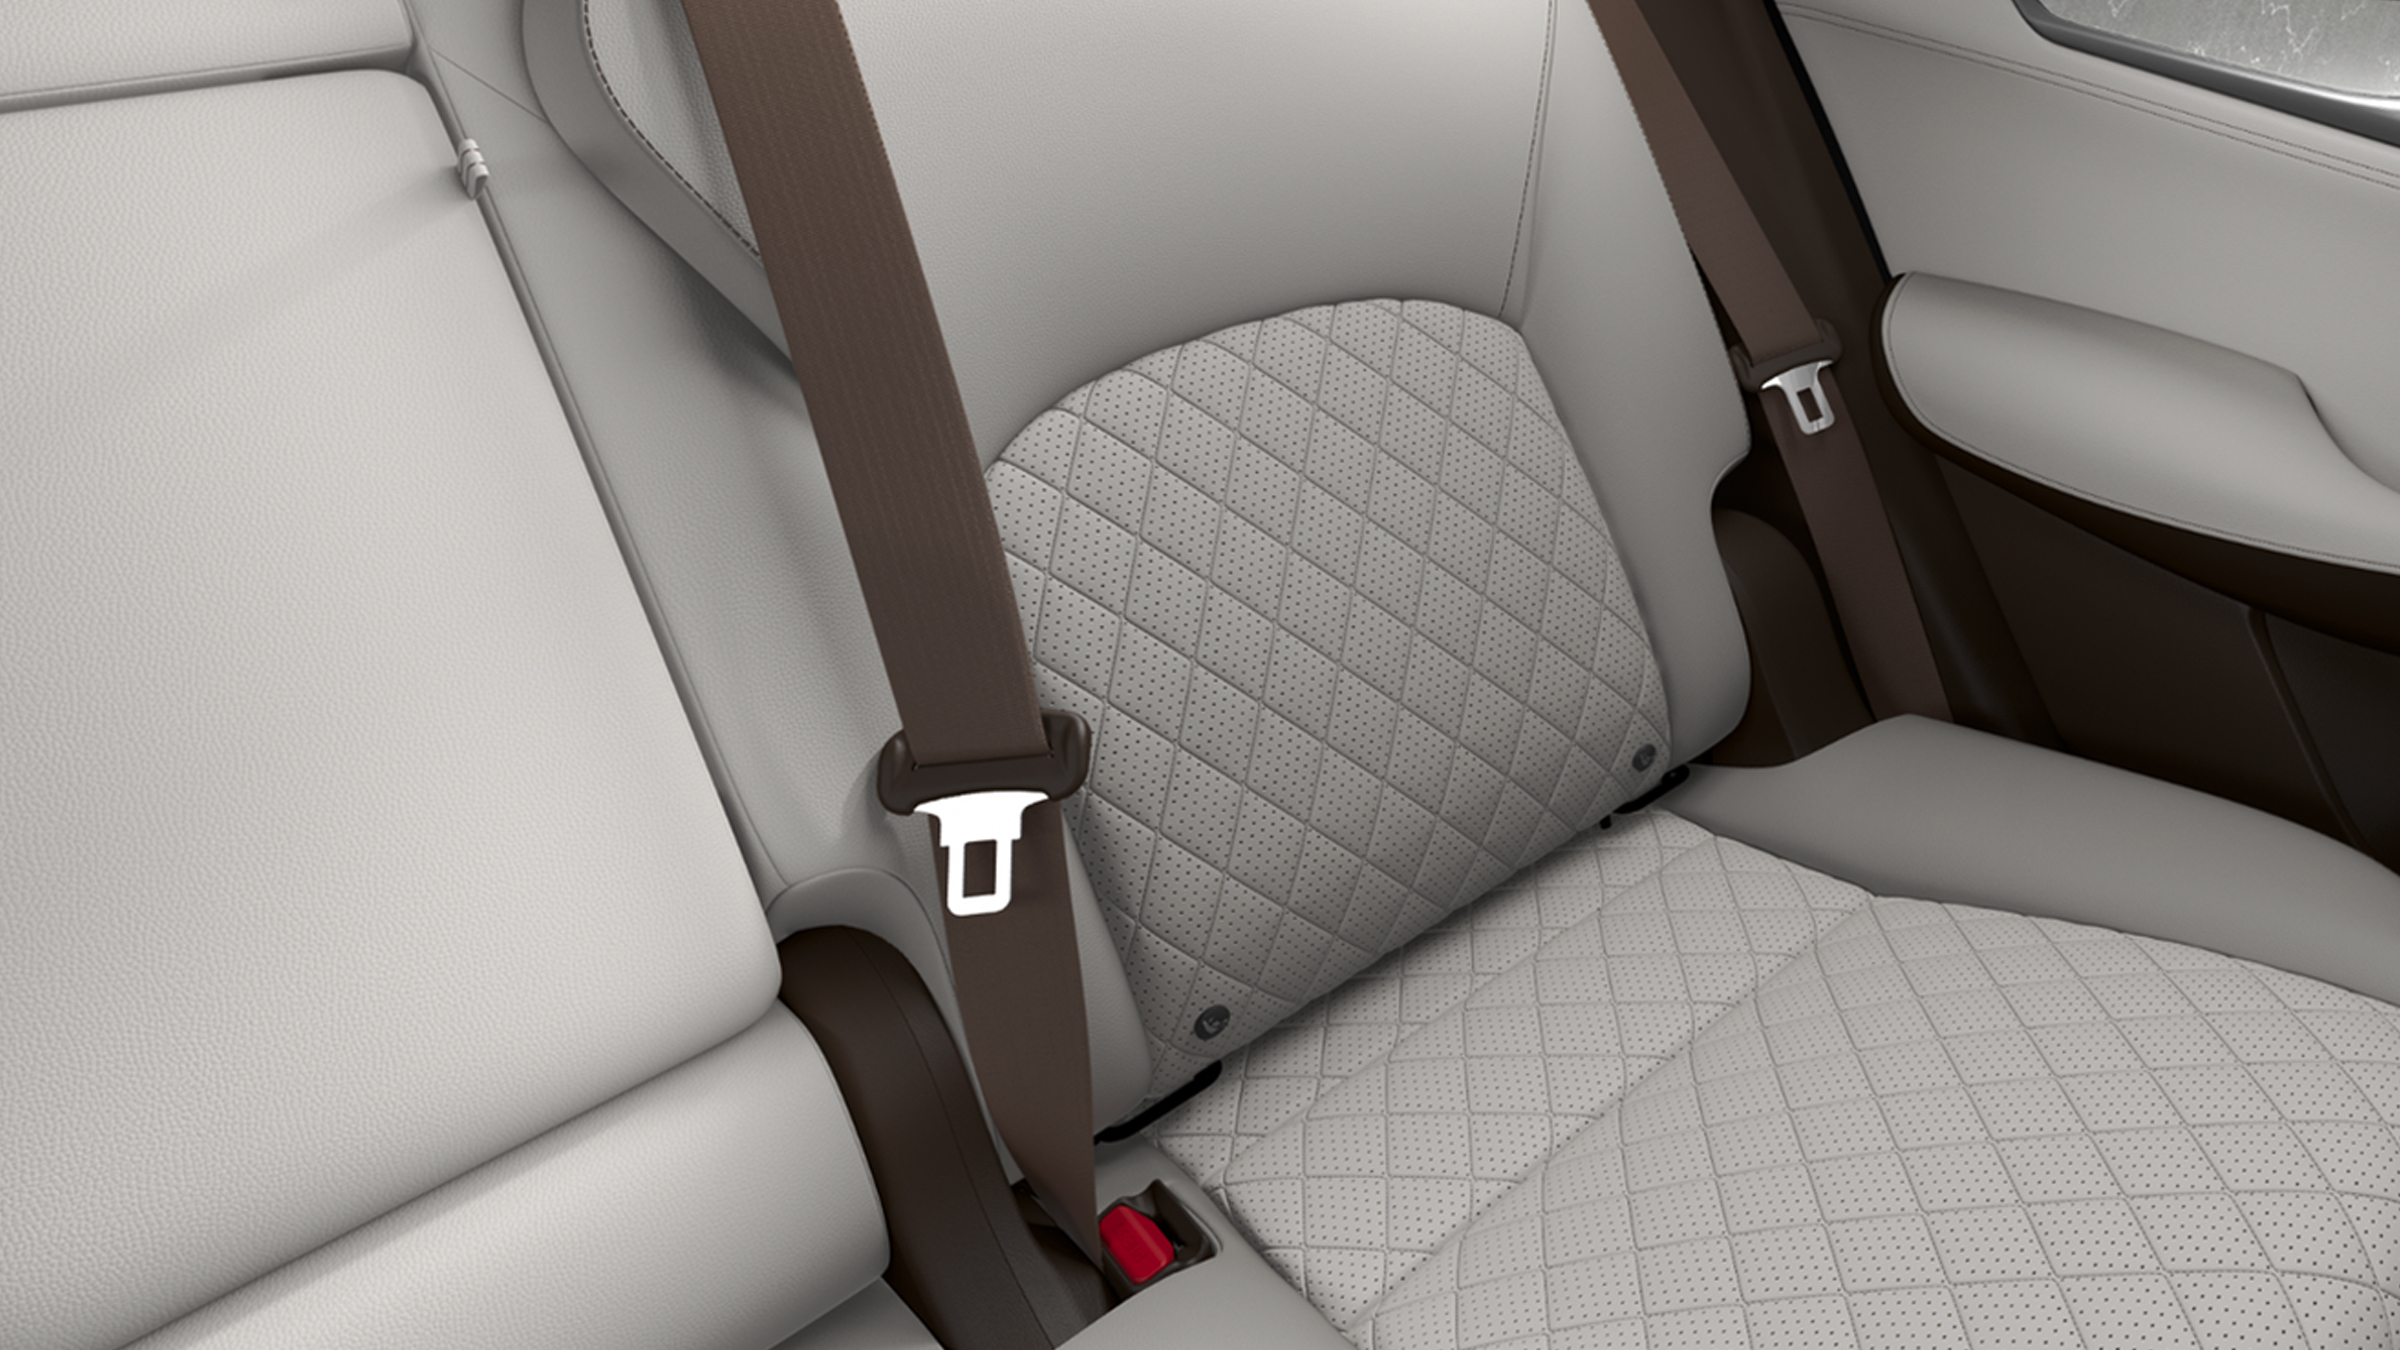 2022 INFINITI QX50 SUV leather seats.